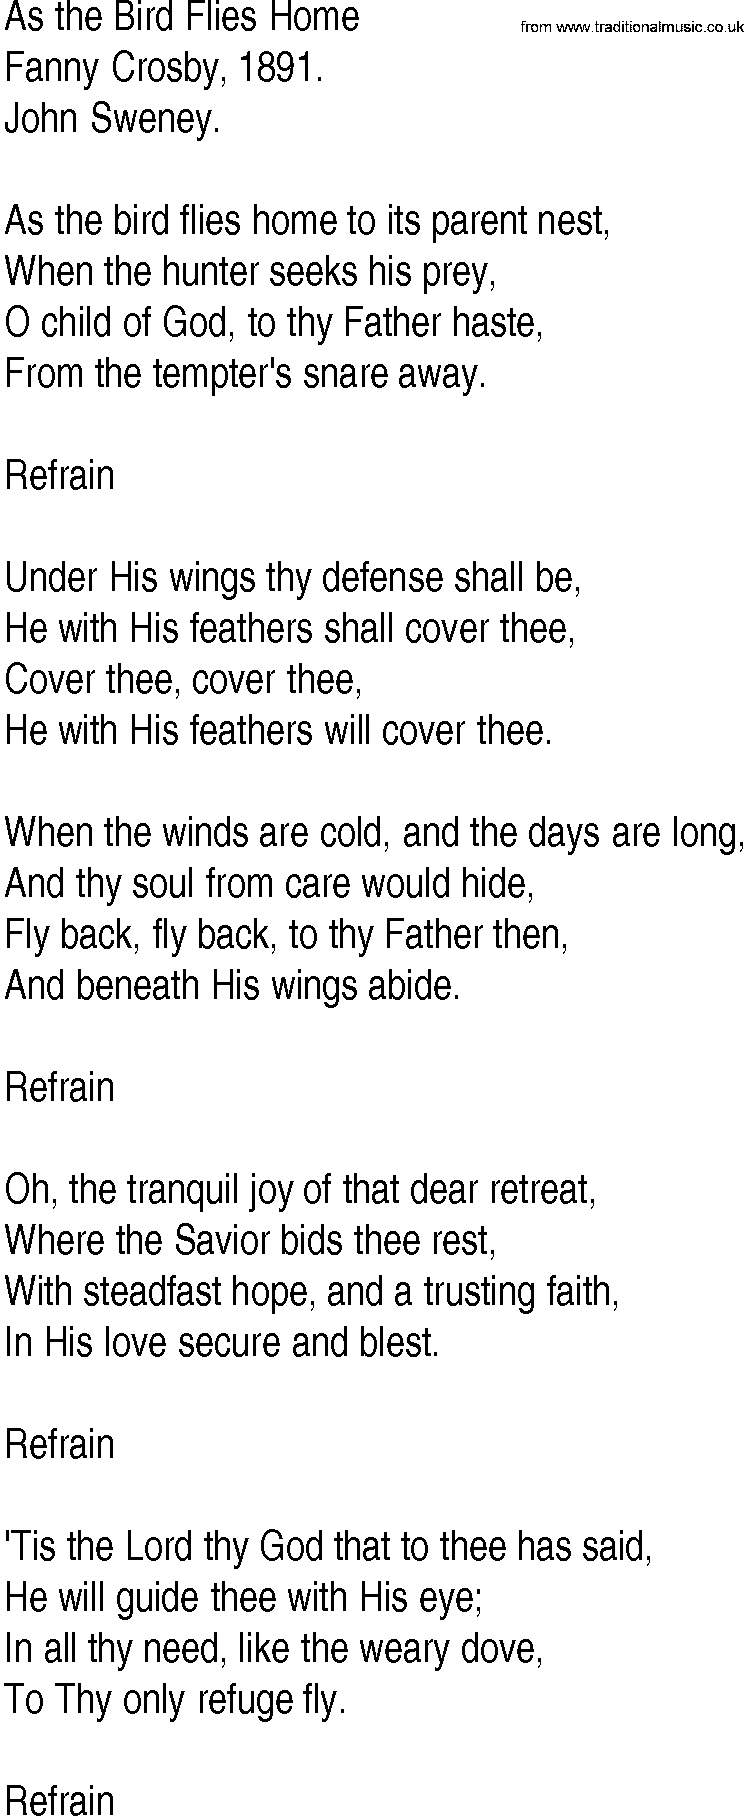 Hymn and Gospel Song: As the Bird Flies Home by Fanny Crosby lyrics